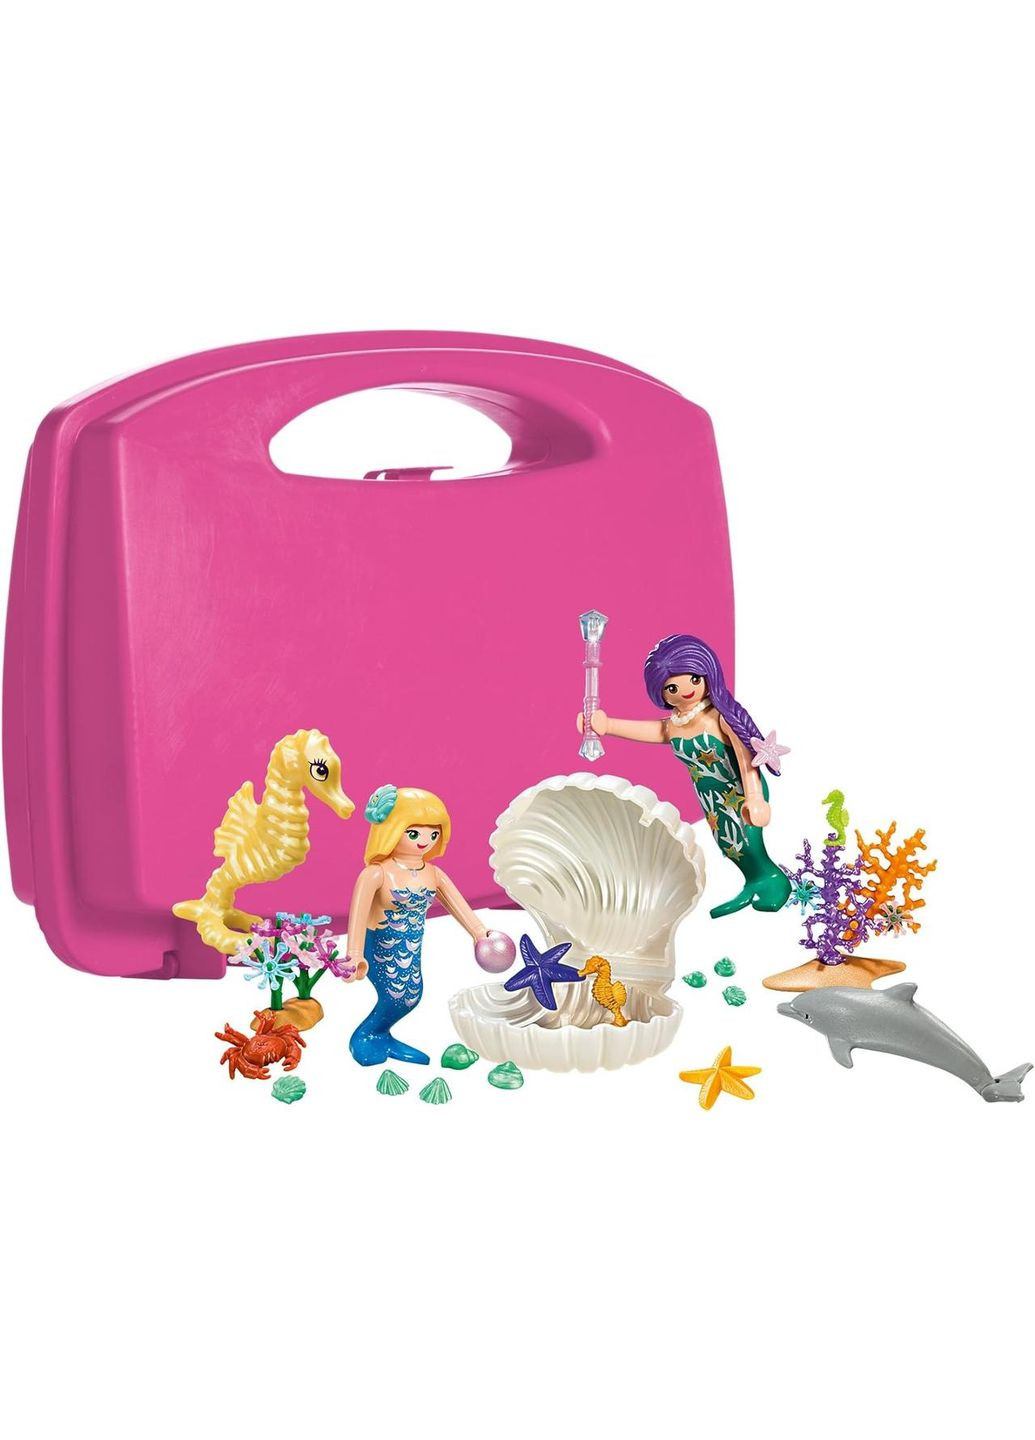 Игровой набор Magical Mermaids Carry Case; with Hair Clips & Accessories чемоданчик с куколками и аксессуарами Playmobil (282964509)